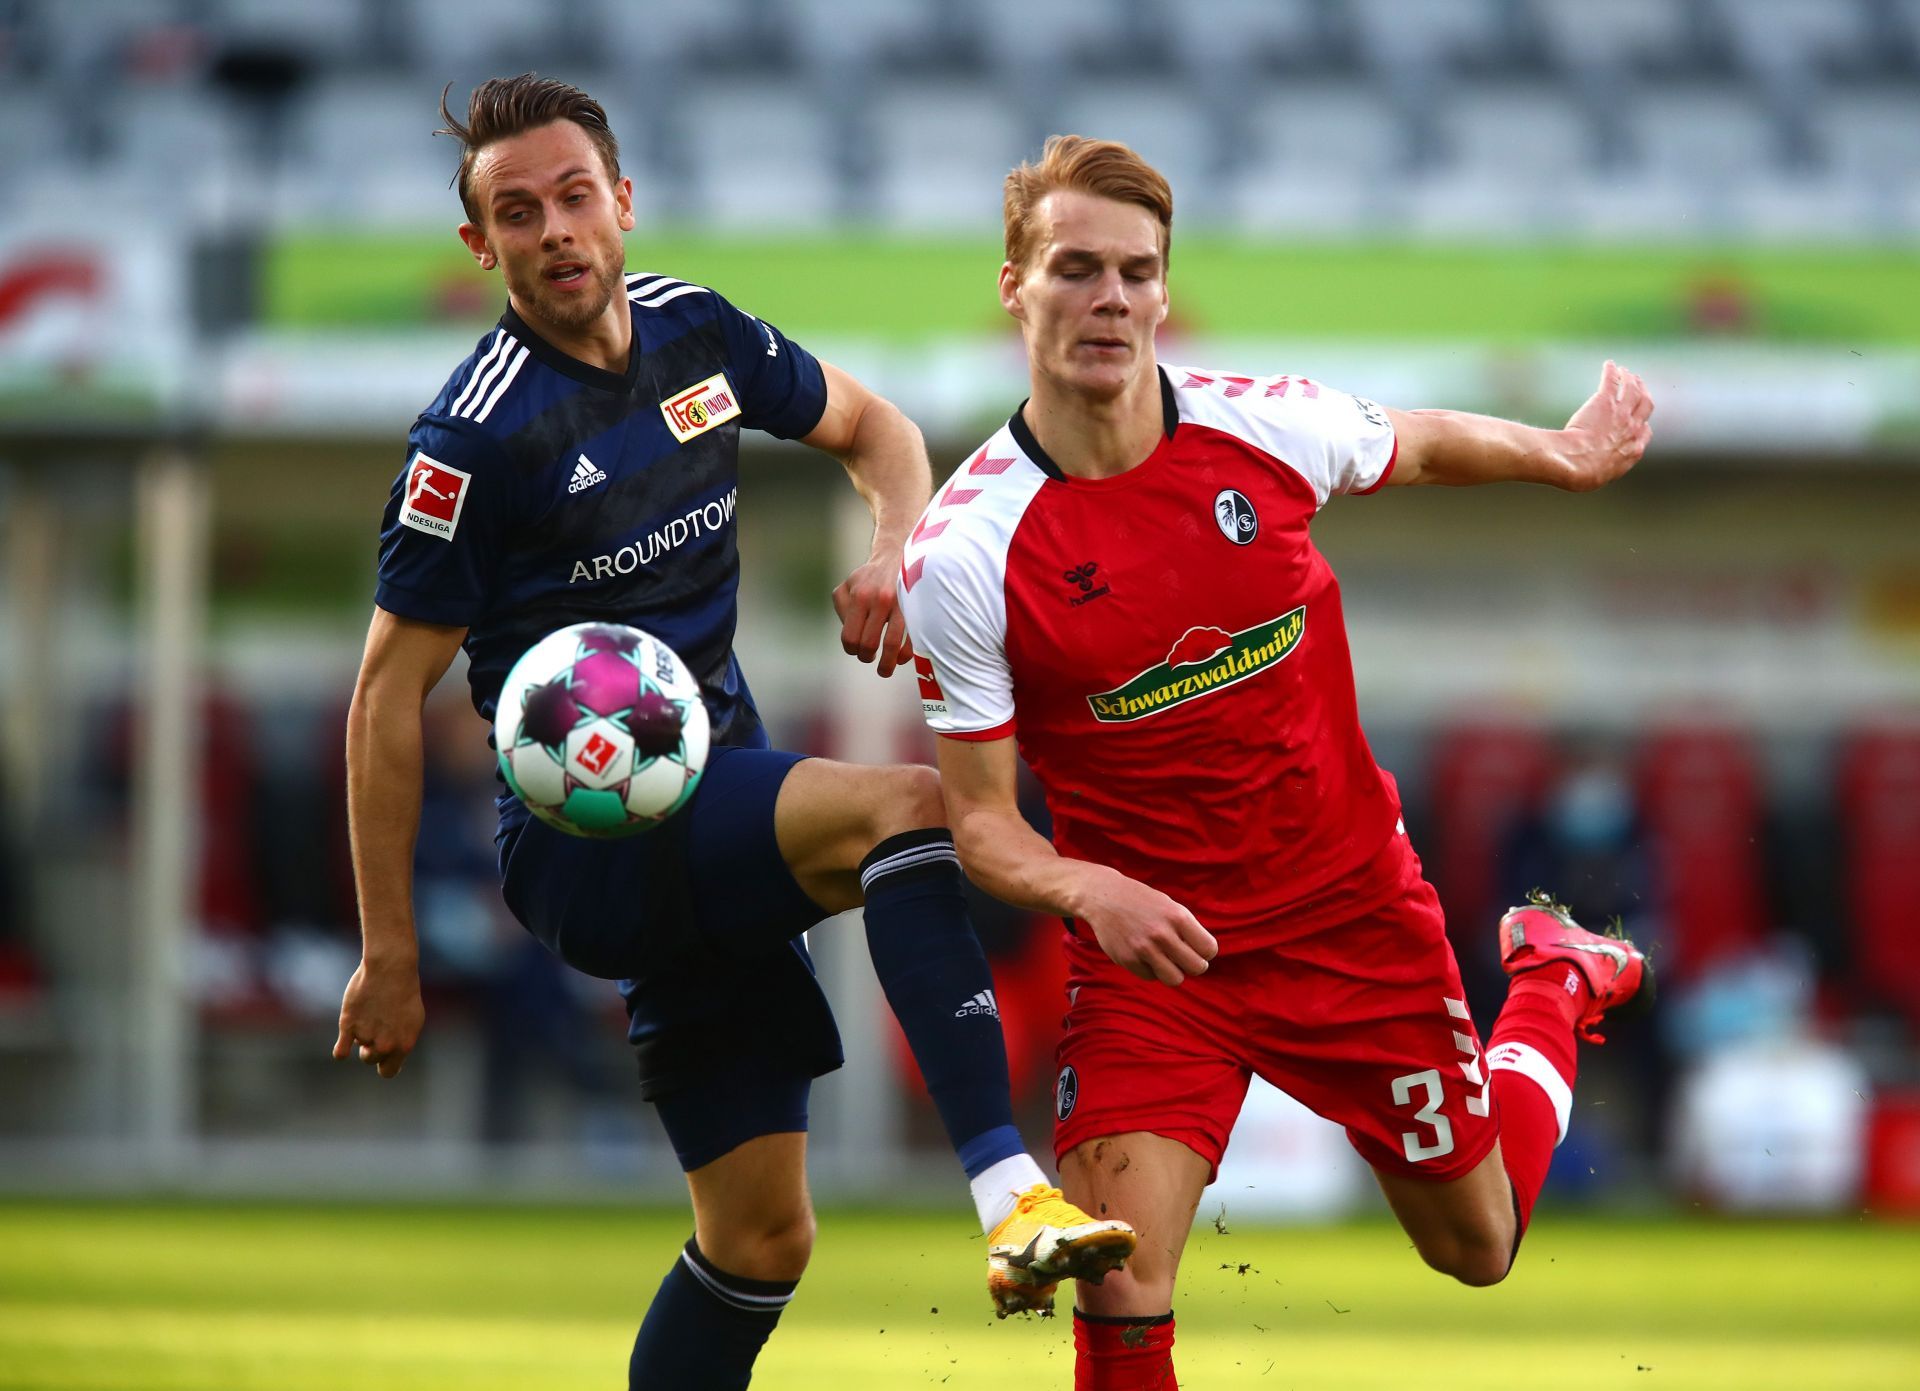 Freiburg face Union Berlin in their upcoming Bundesliga fixture on Saturday